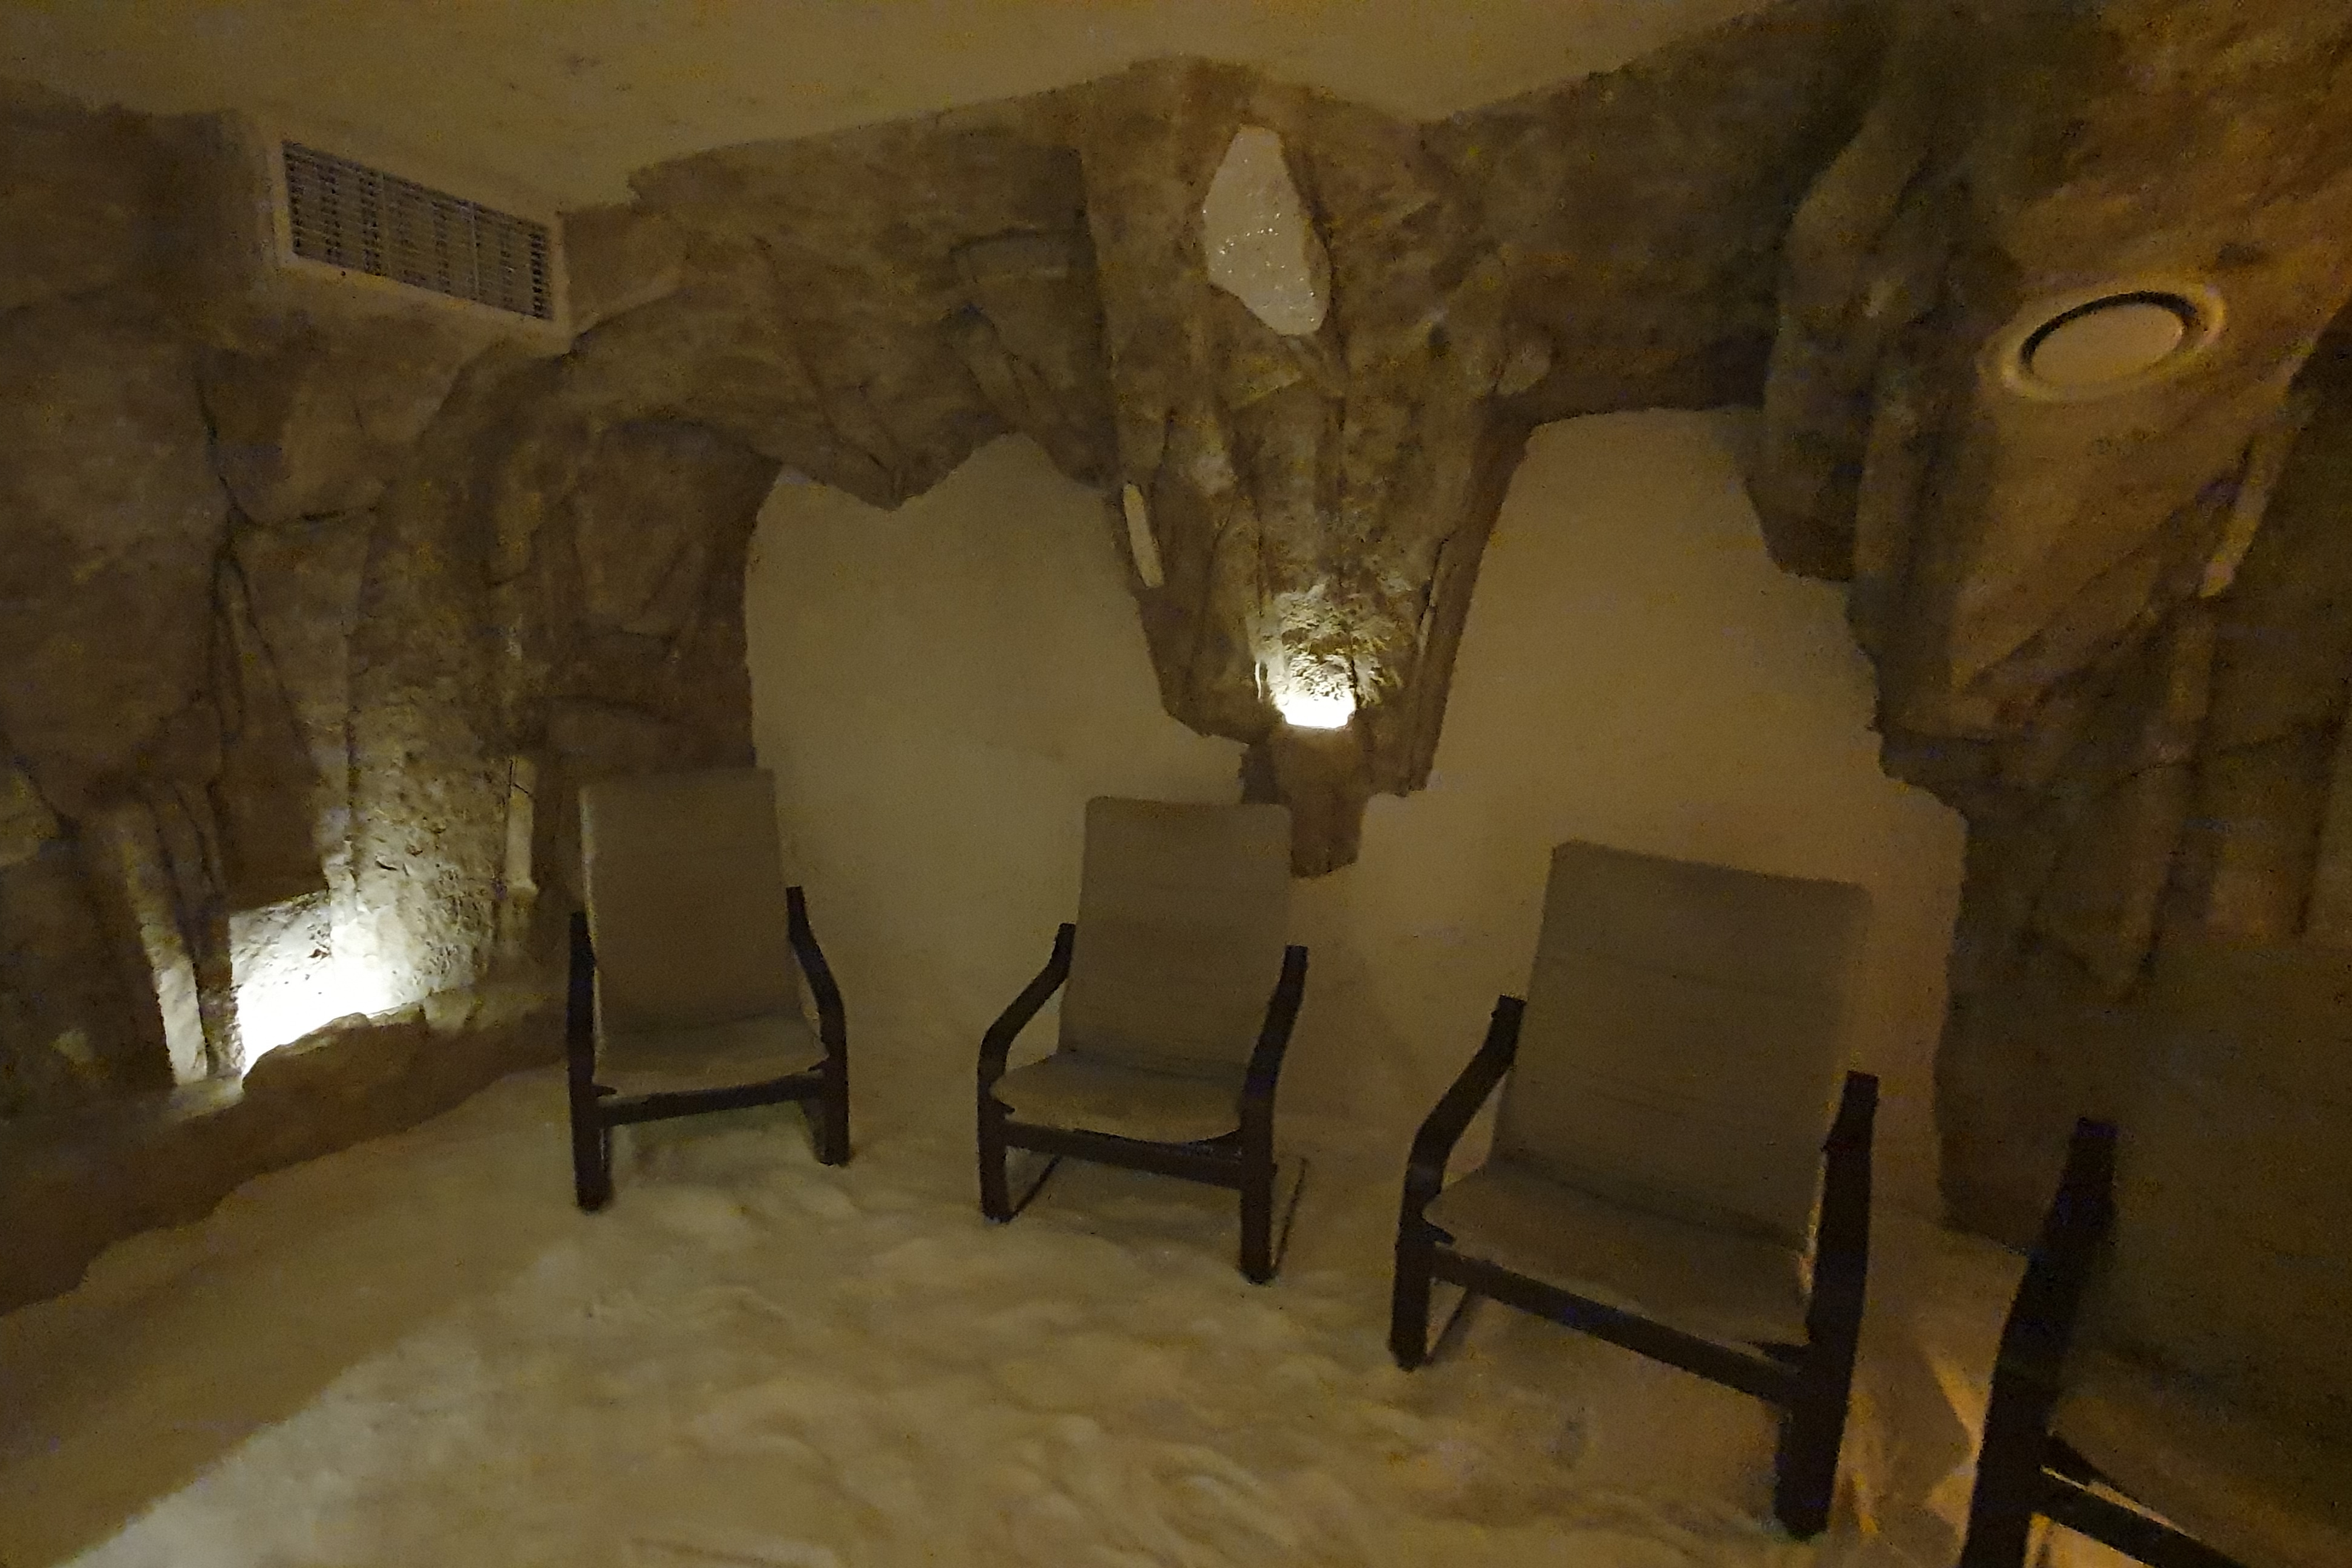 Salt room or cave